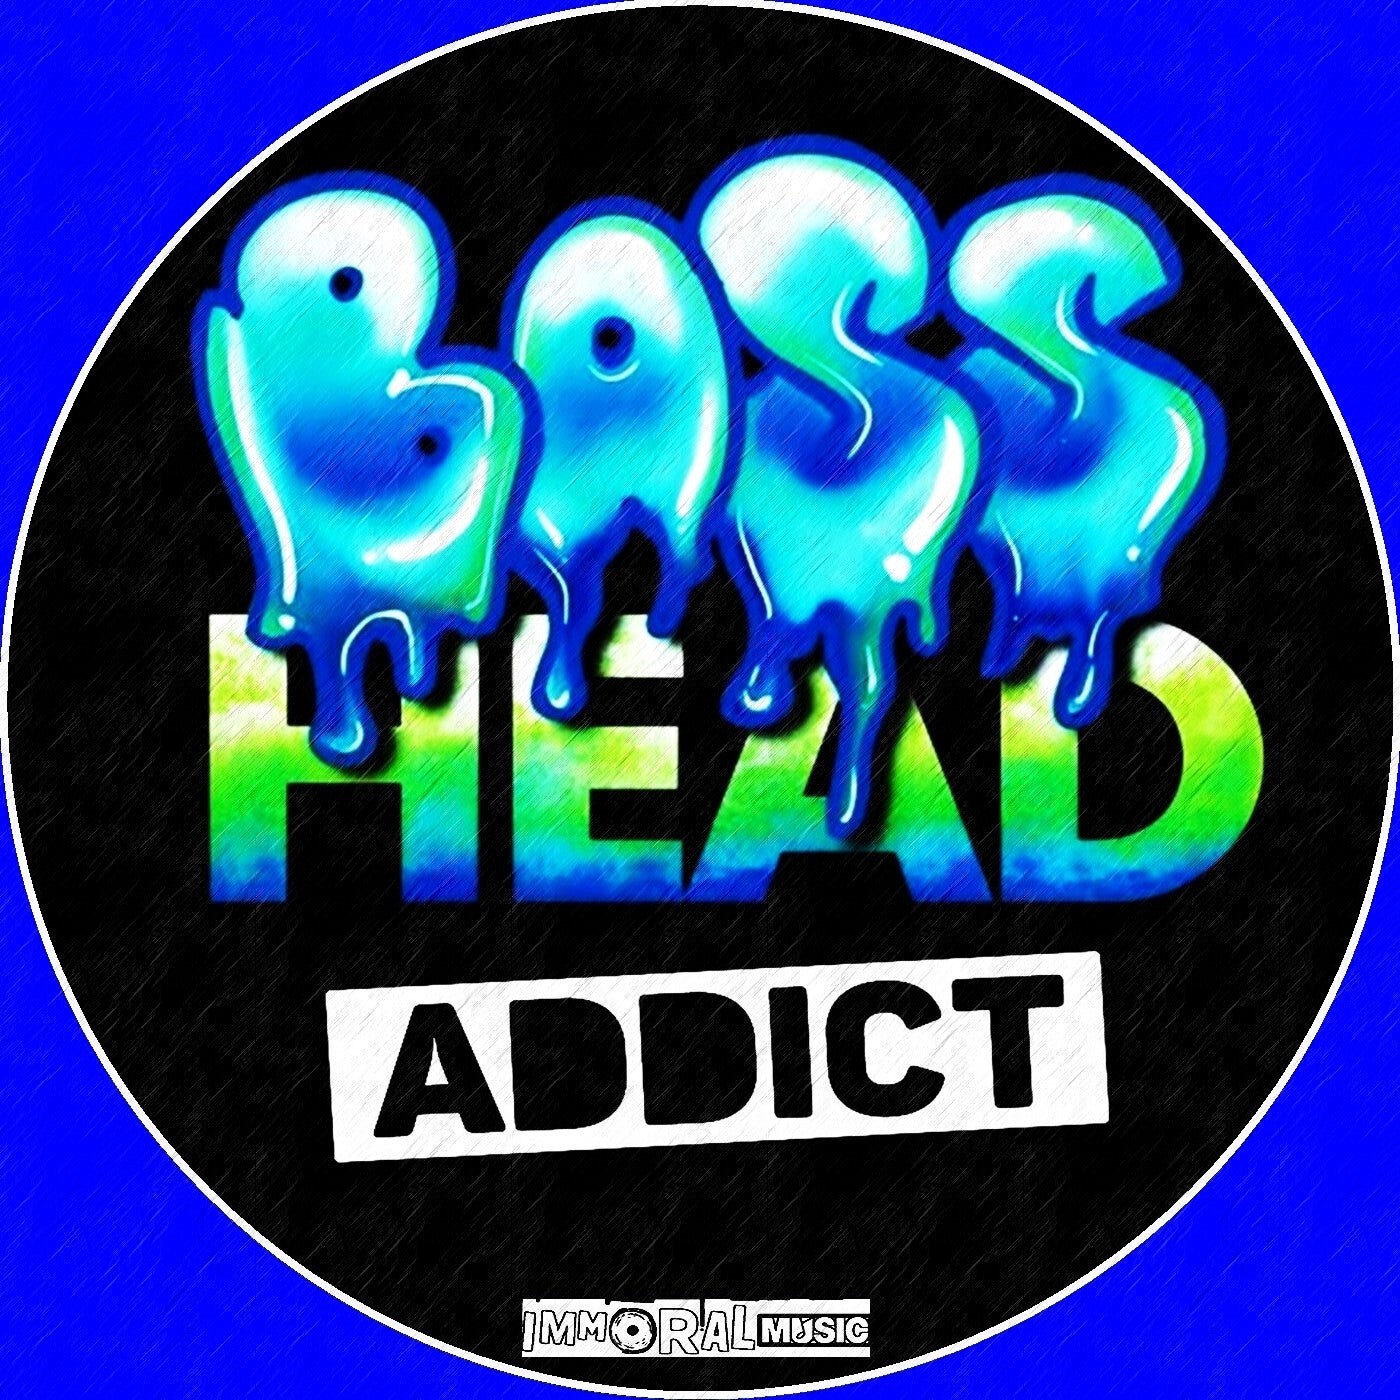 Bass Head Addict